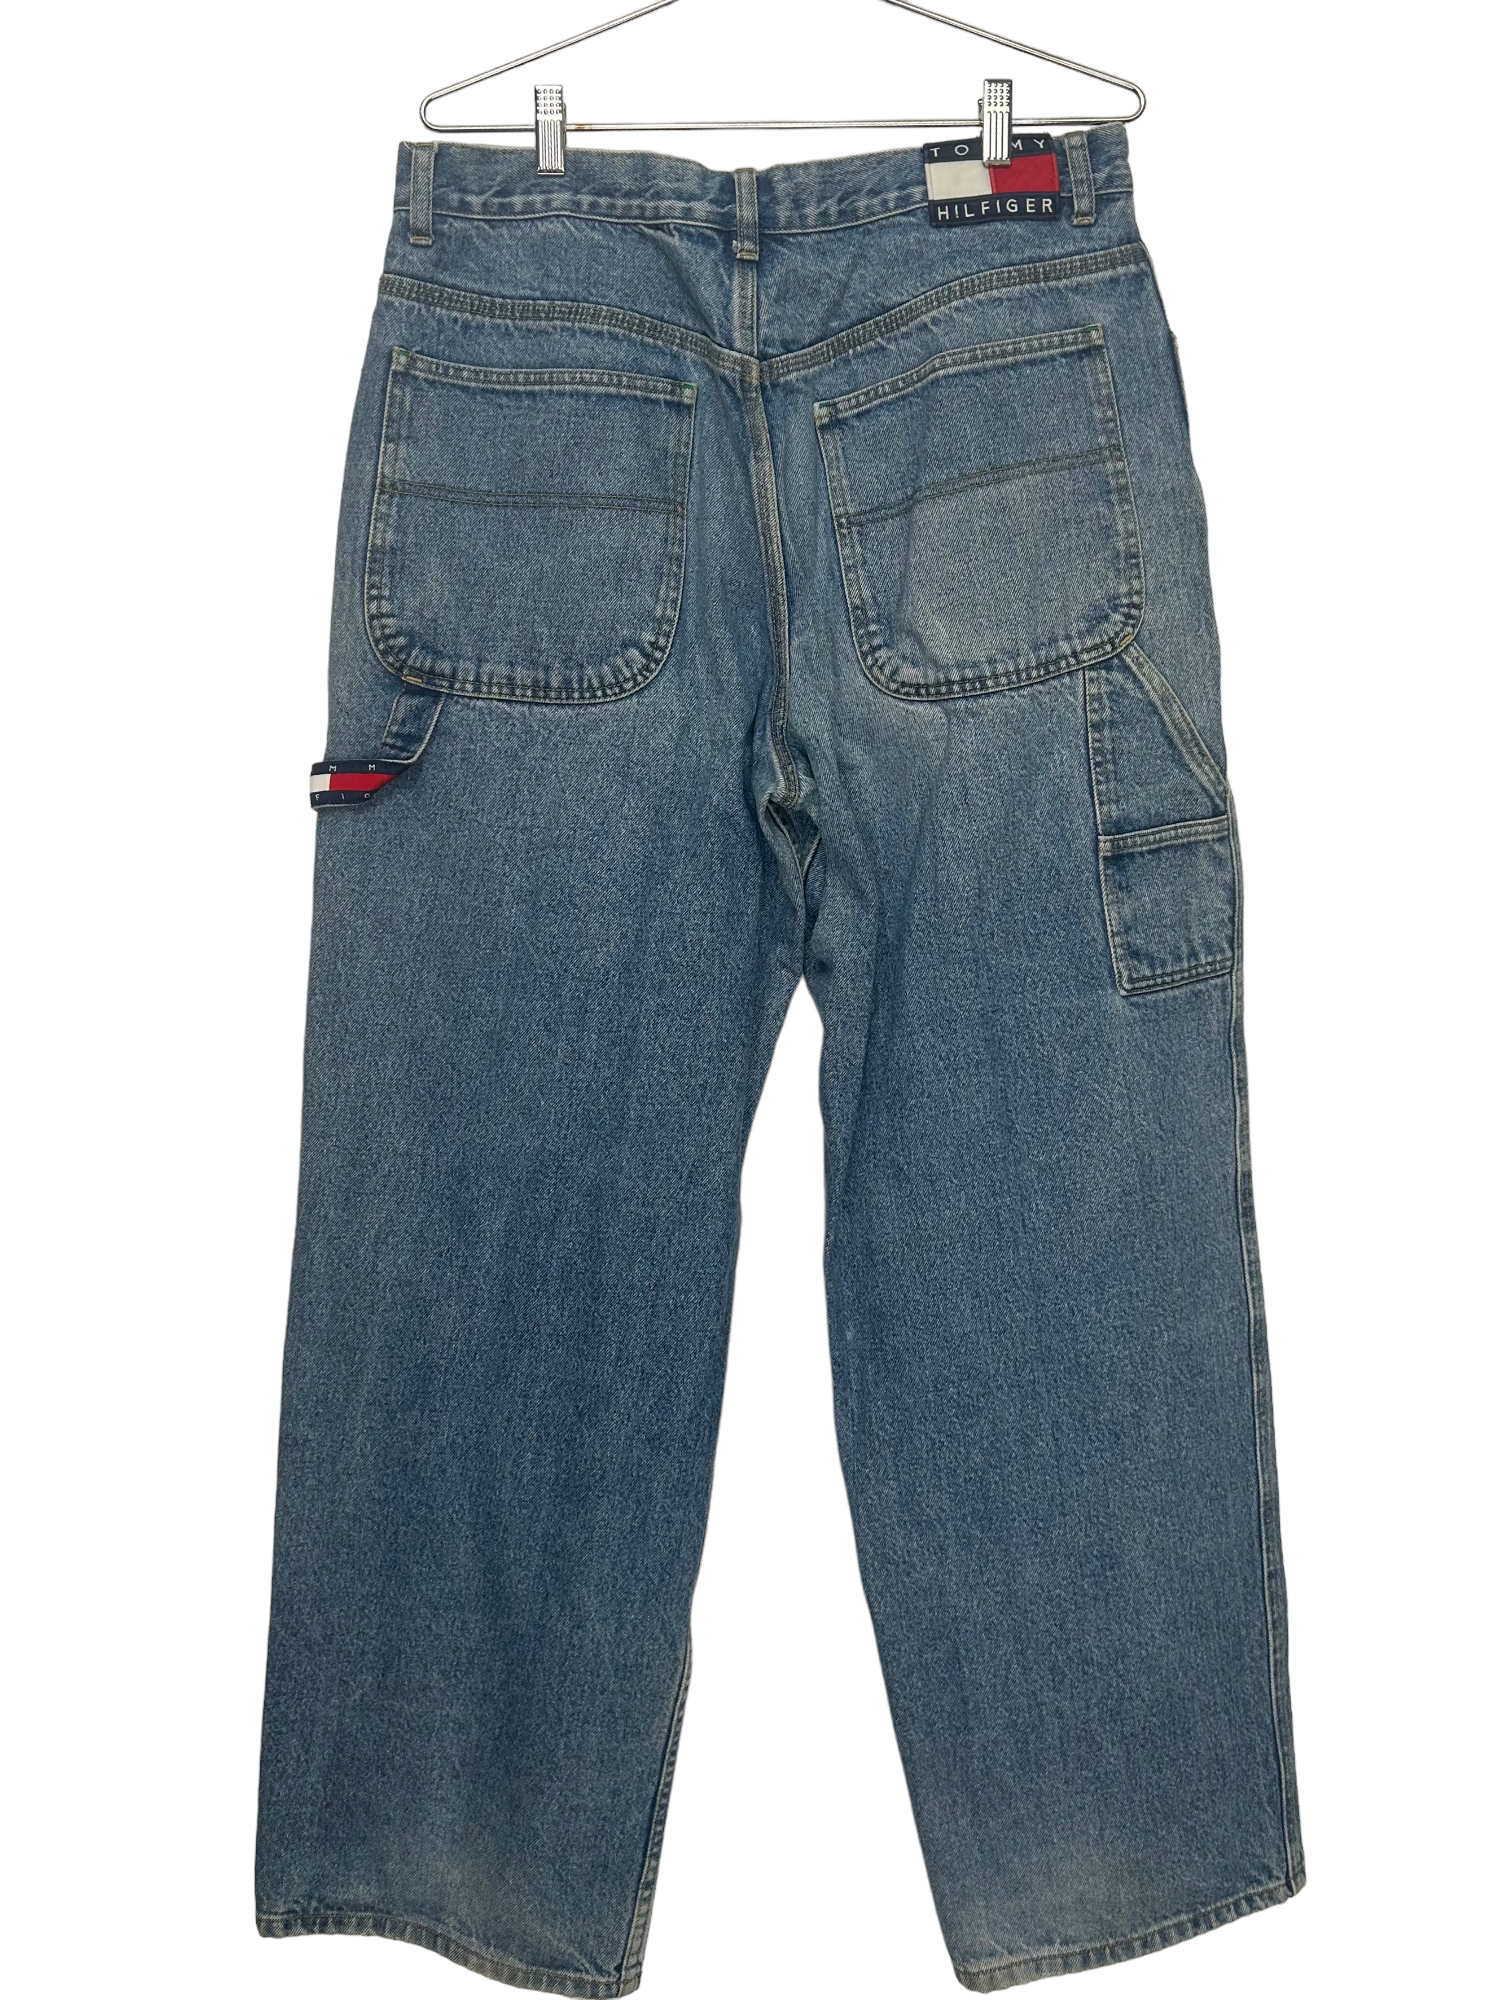 Tommy Hilfiger Medium Wash Jeans